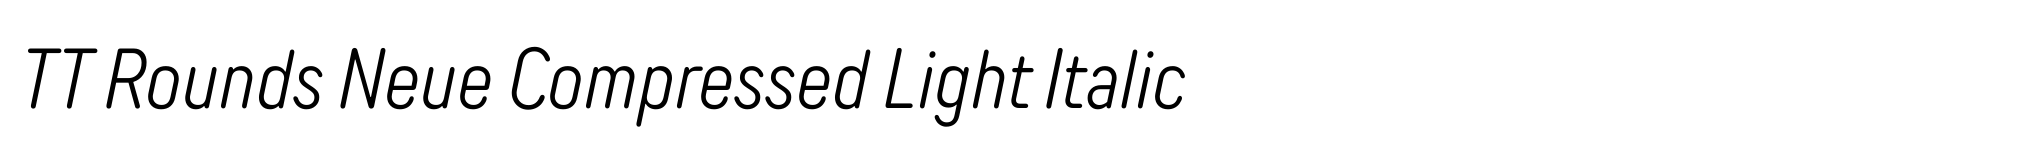 TT Rounds Neue Compressed Light Italic image